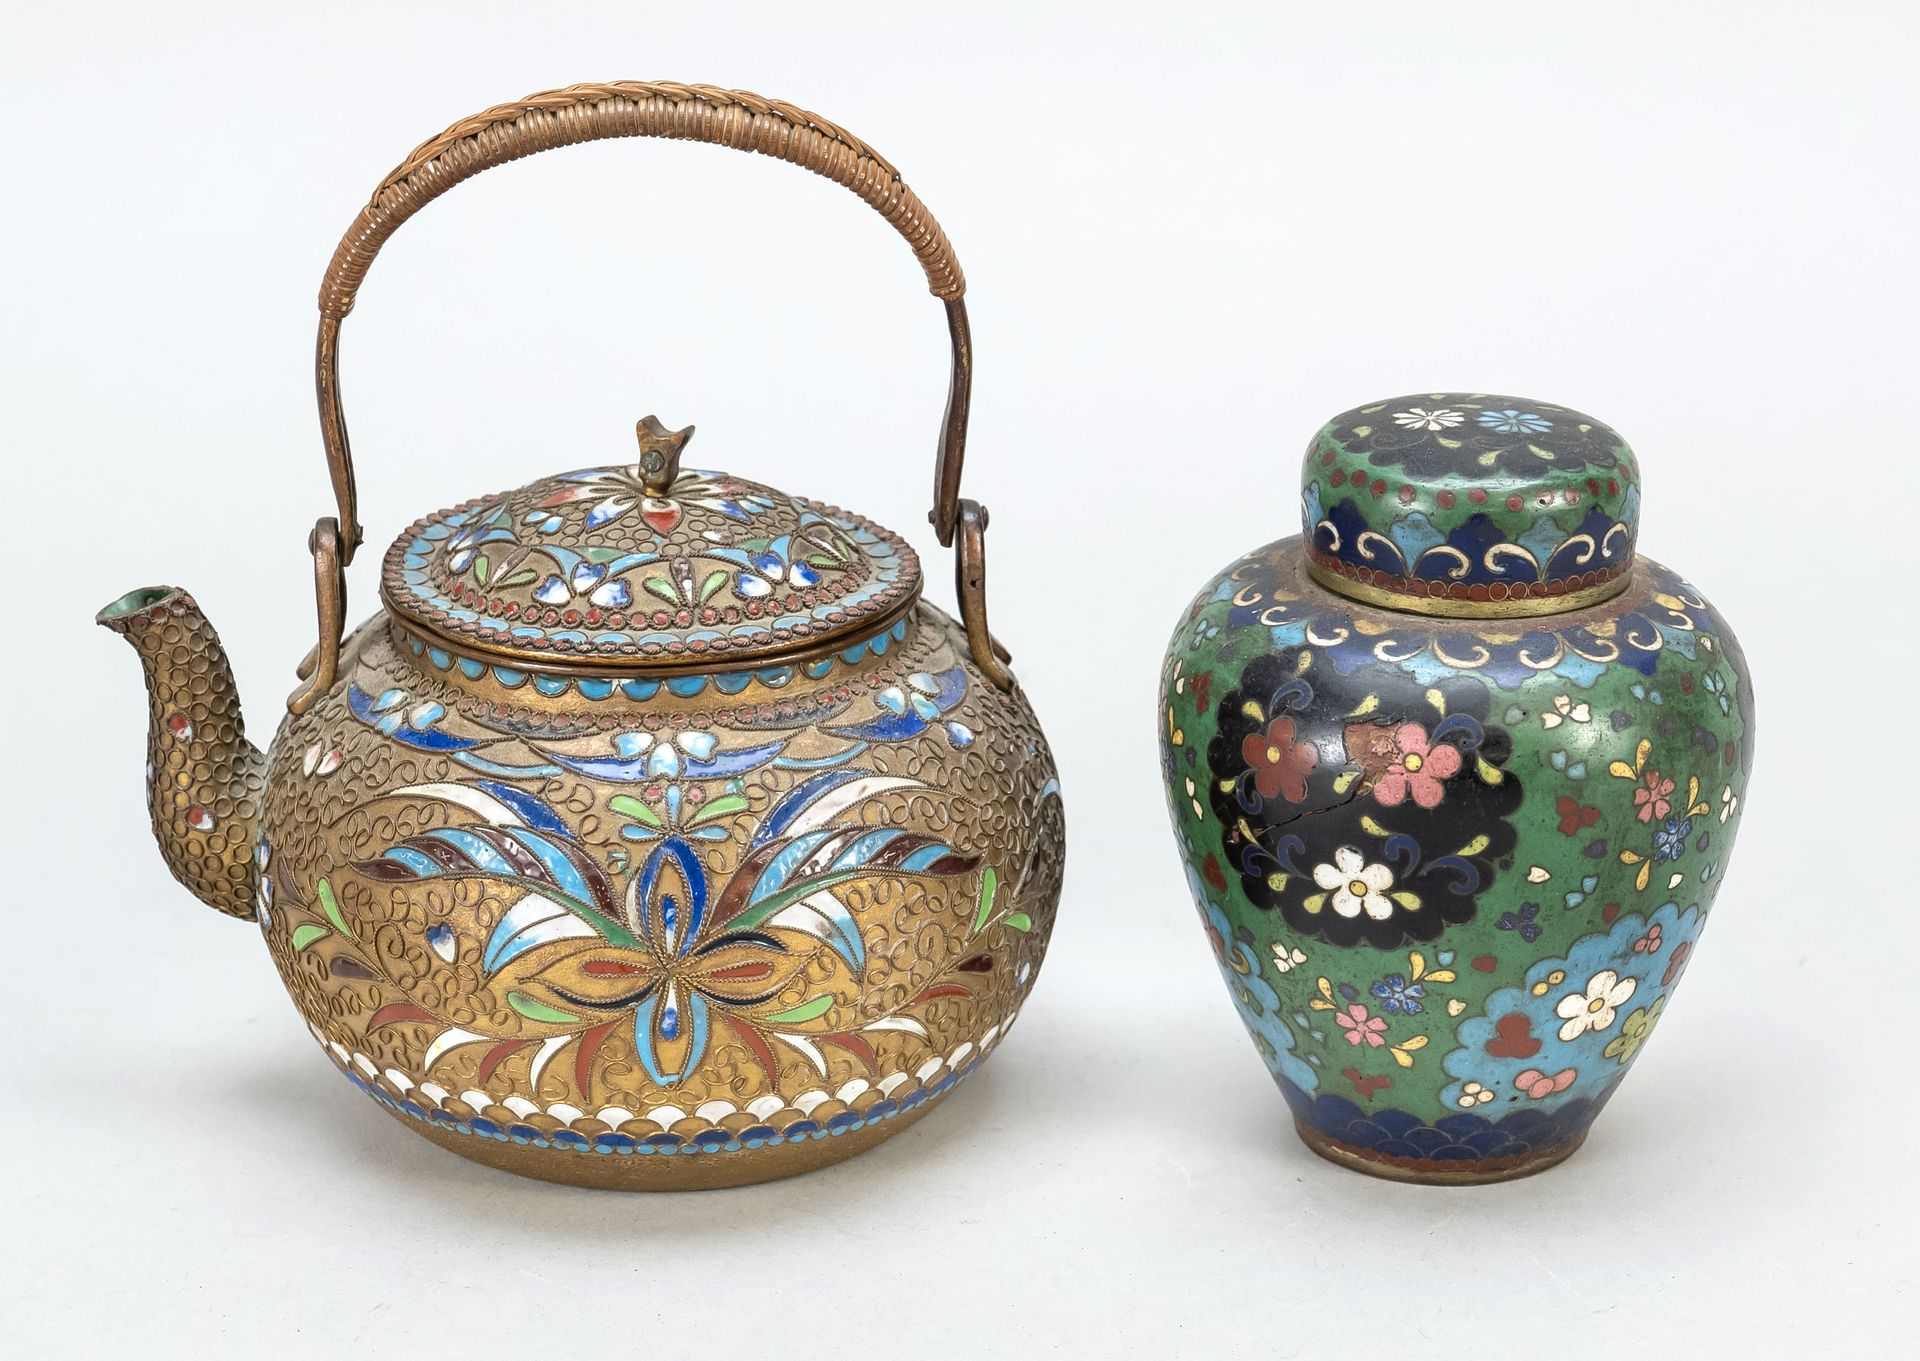 Null 2件景泰蓝：1件茶壶（champ-levée），俄罗斯，19世纪末，高10厘米。1 x 景泰蓝盖子壶，日本，约1900年，高10厘米。